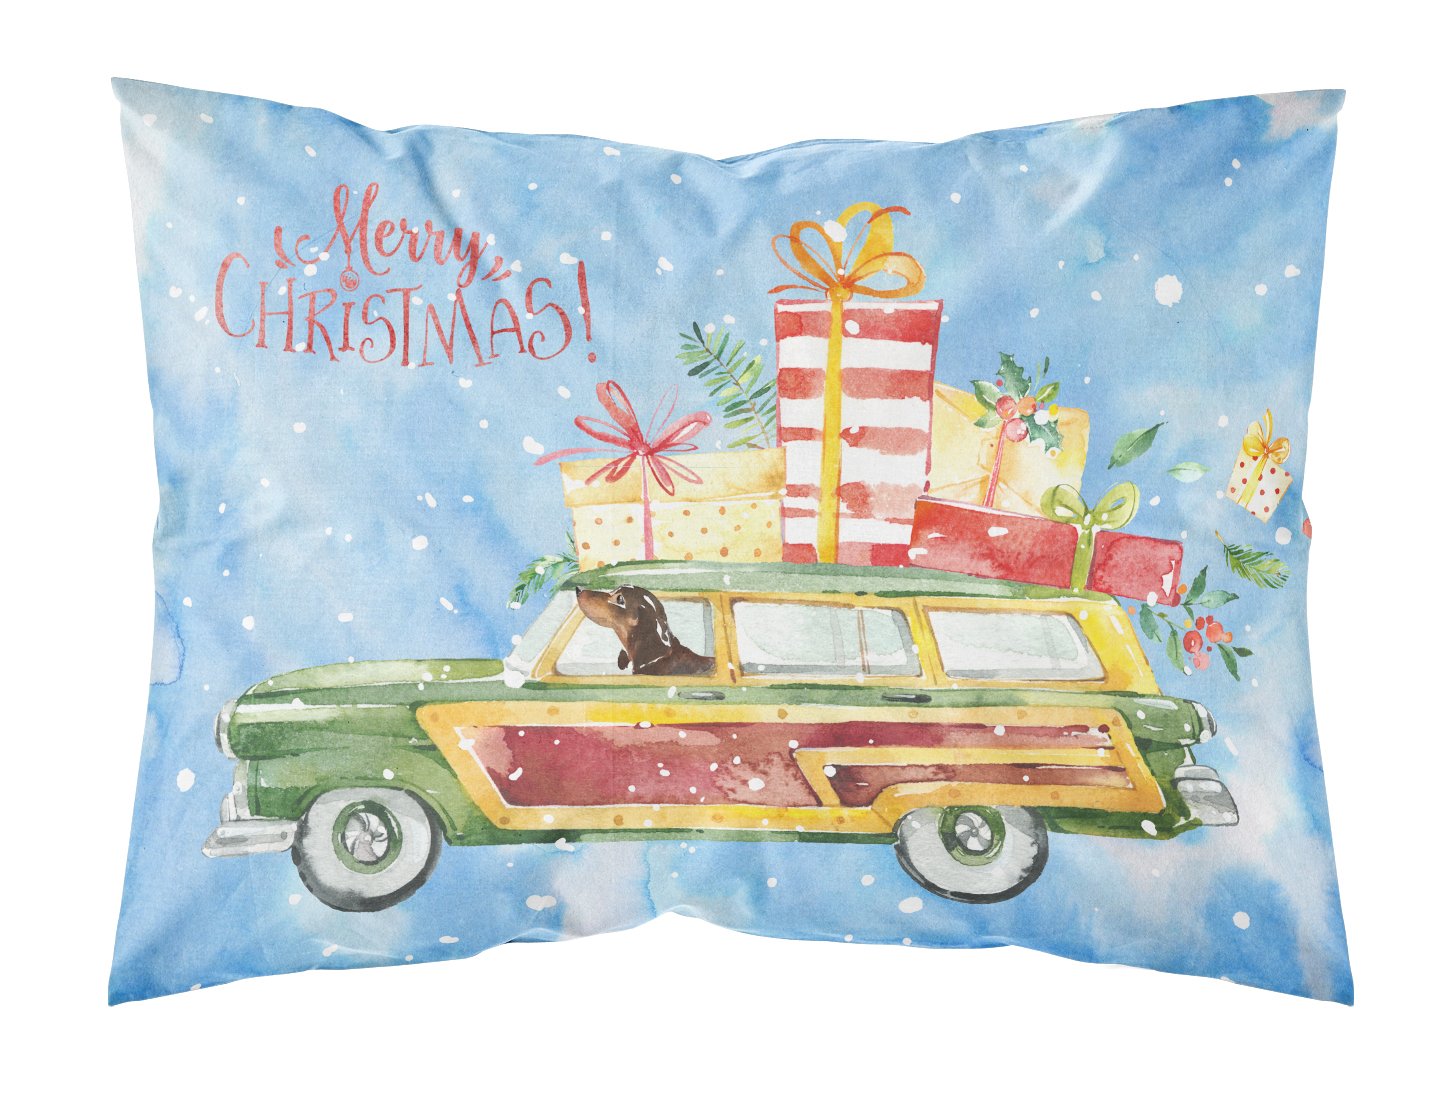 Merry Christmas Dachshund Fabric Standard Pillowcase CK2443PILLOWCASE by Caroline's Treasures